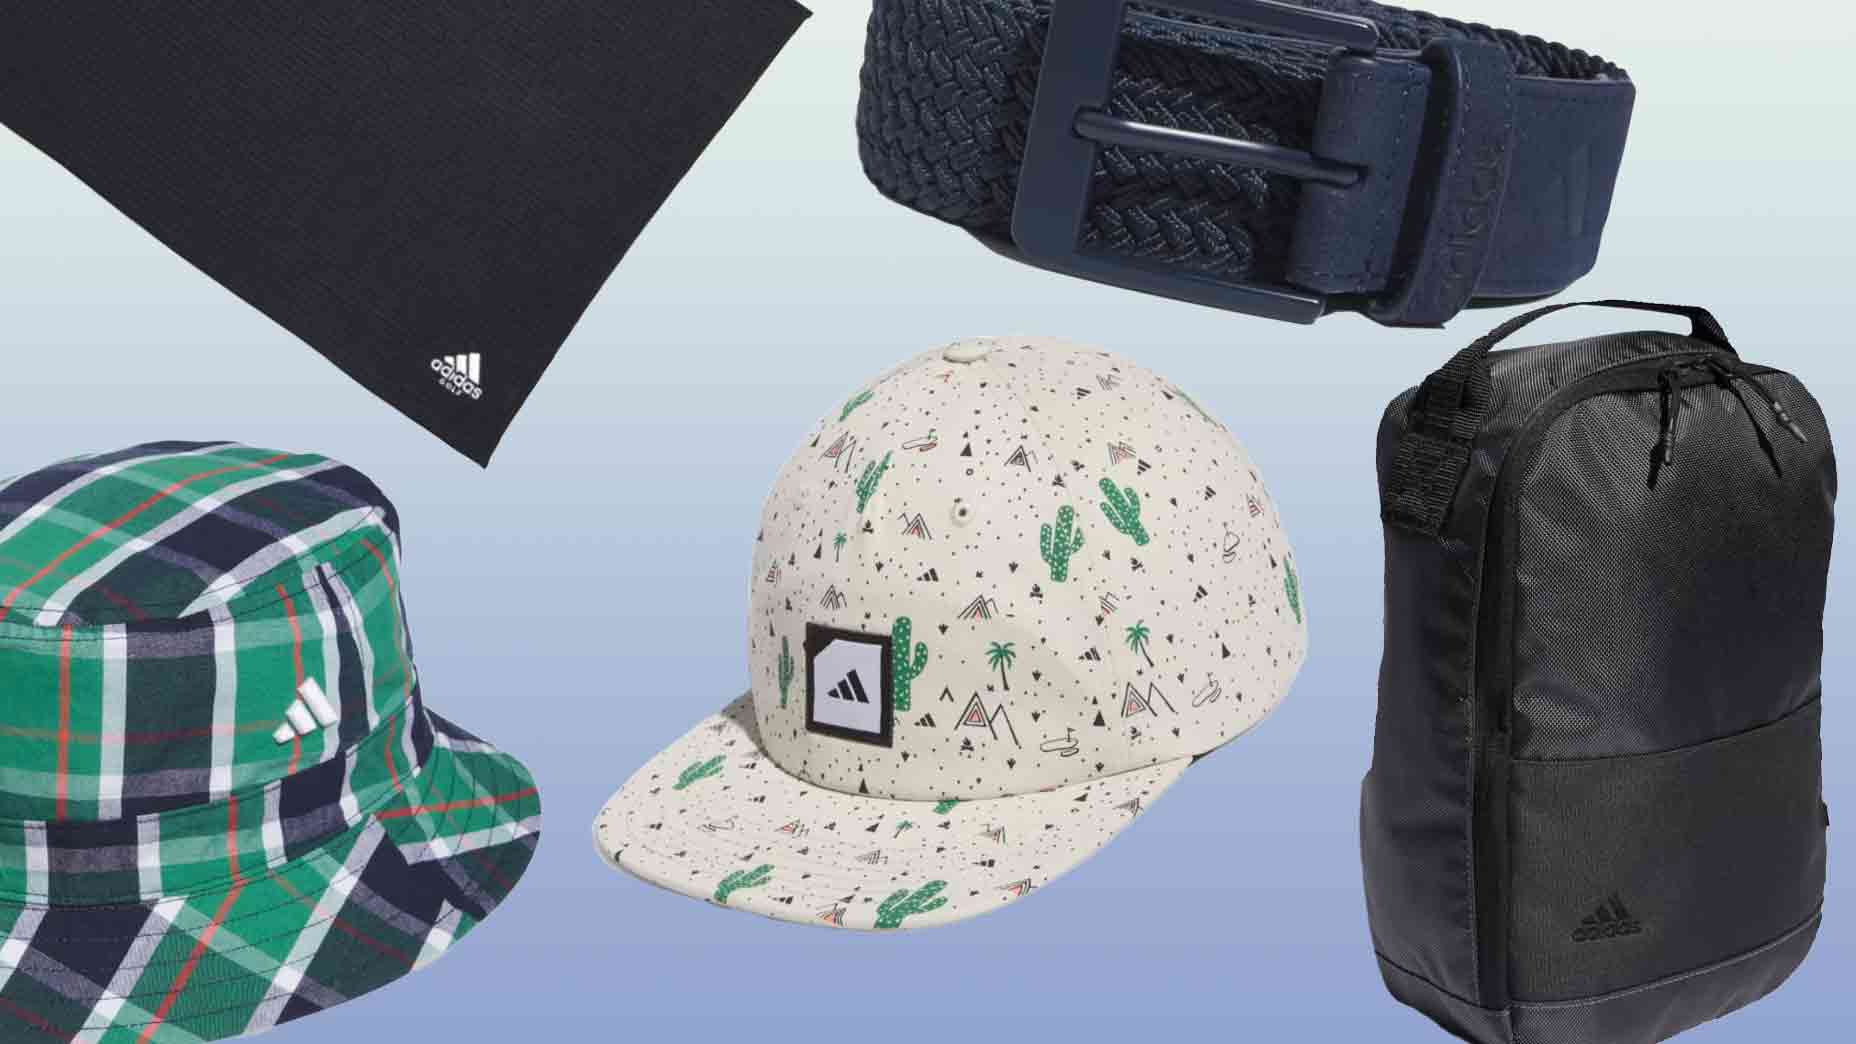 Adidas golf sale: Score a sweet discount on this stylish Adidas gear